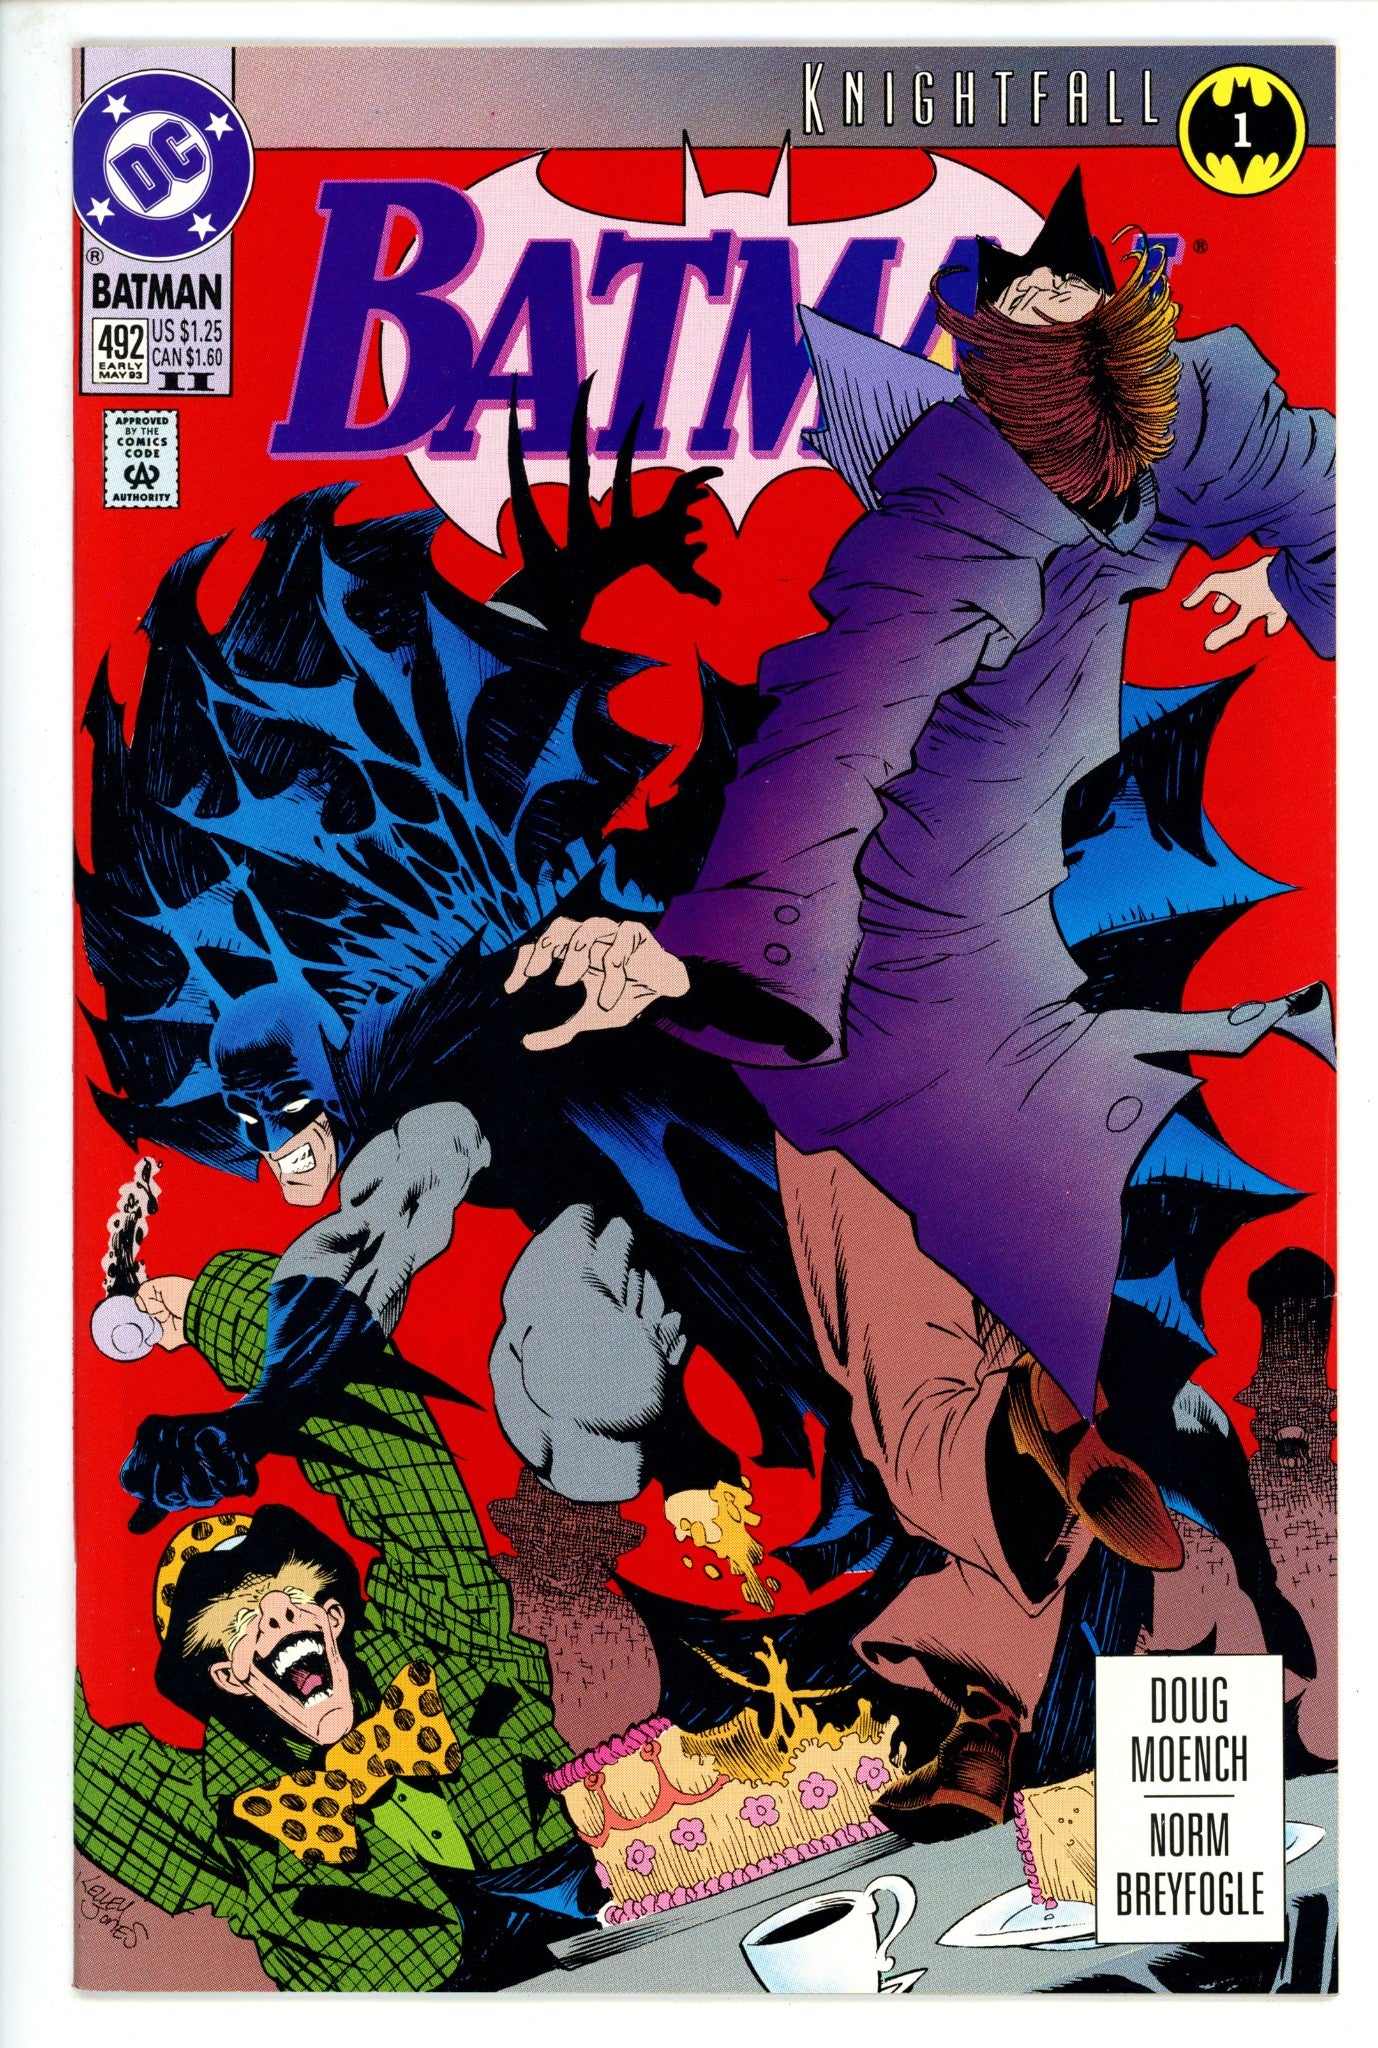 Batman Vol 1 492 2nd Print VF/NM